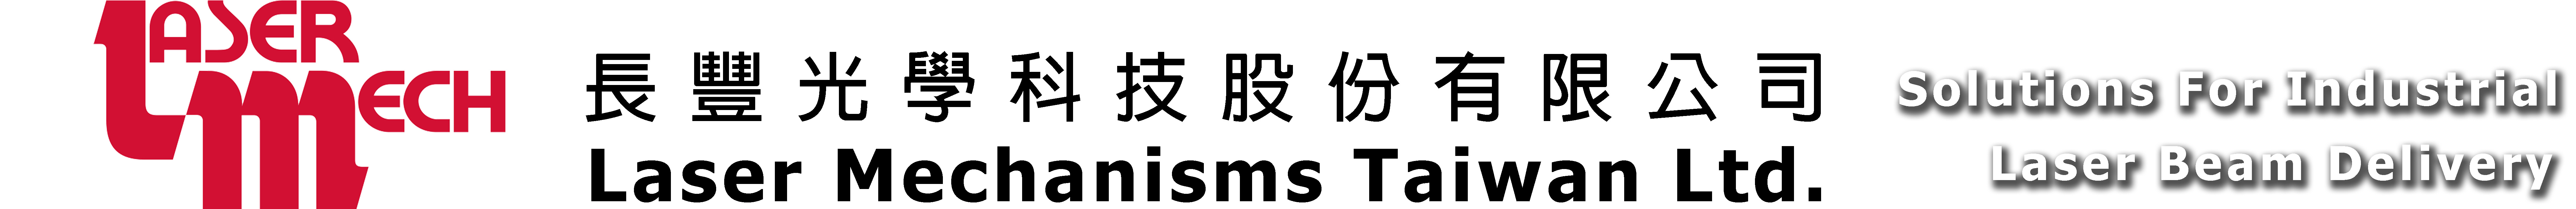 Laser Mechanisms Taiwan Ltd.  長豐光學科技股份有限公司